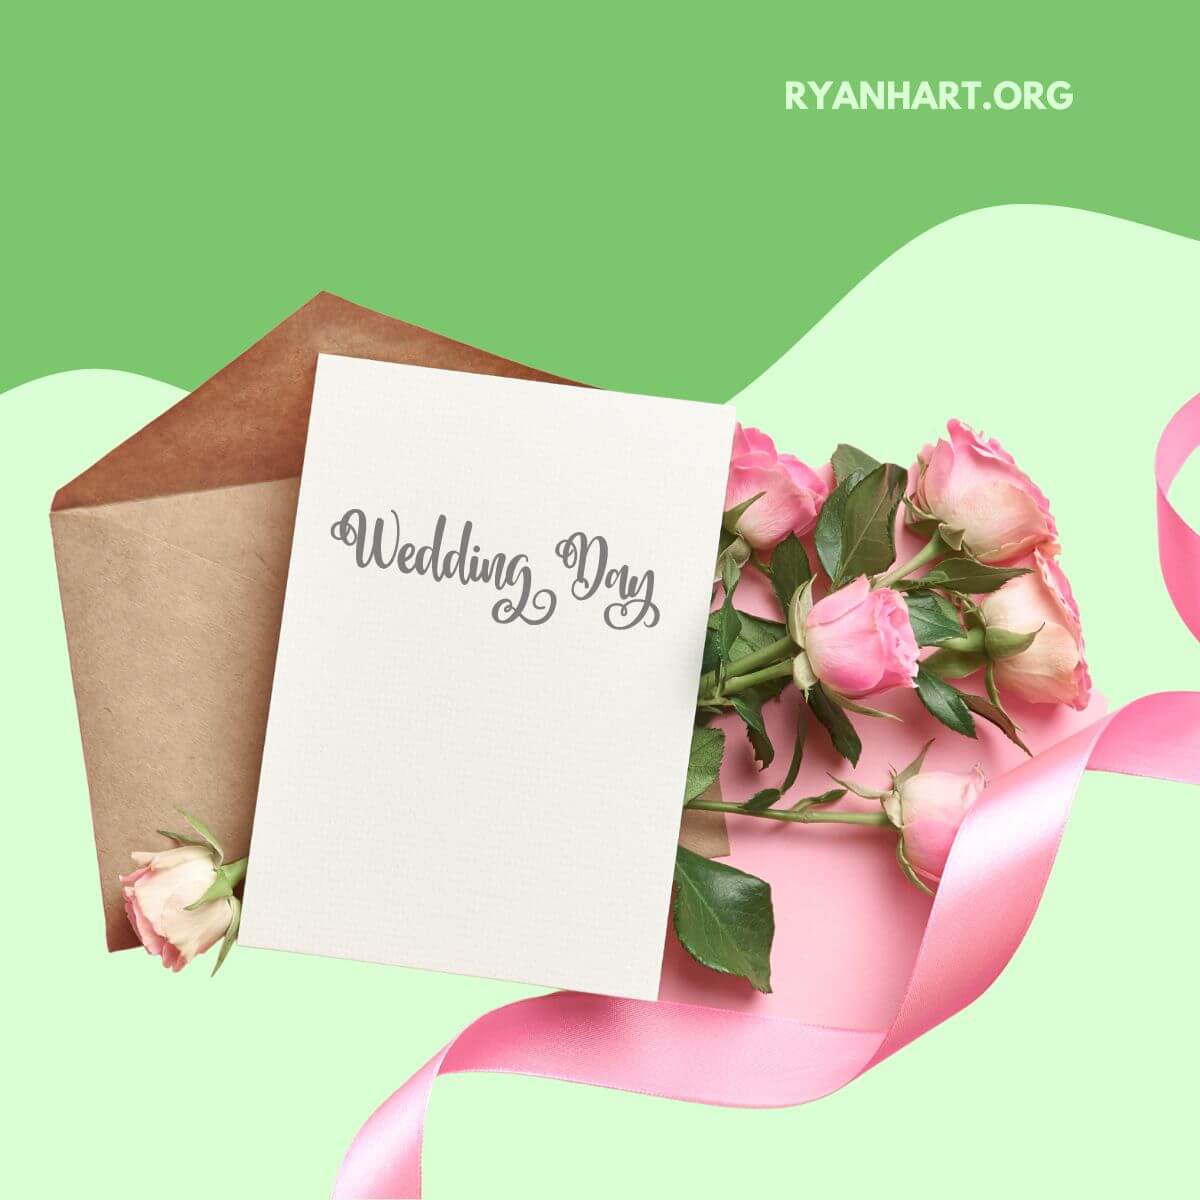 Wedding invite with flowers